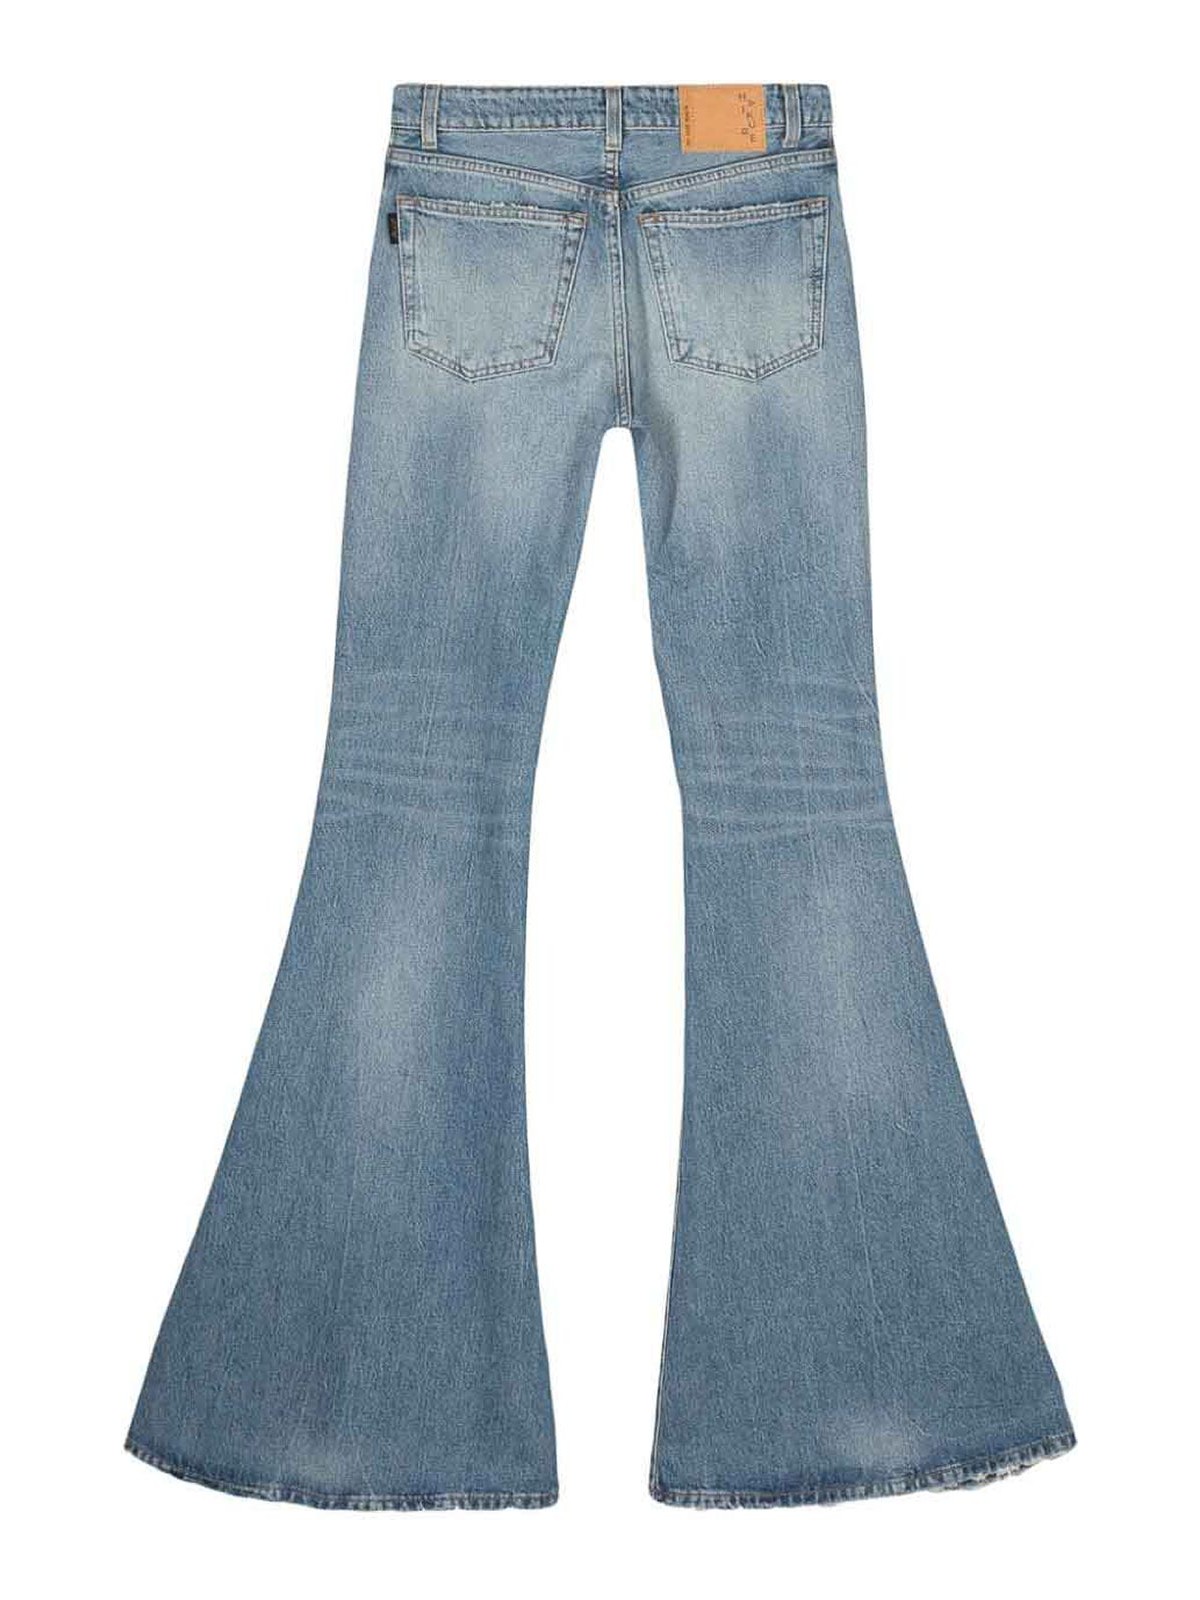 Shop Haikure Jeans Acampanados - Lavado Oscuro